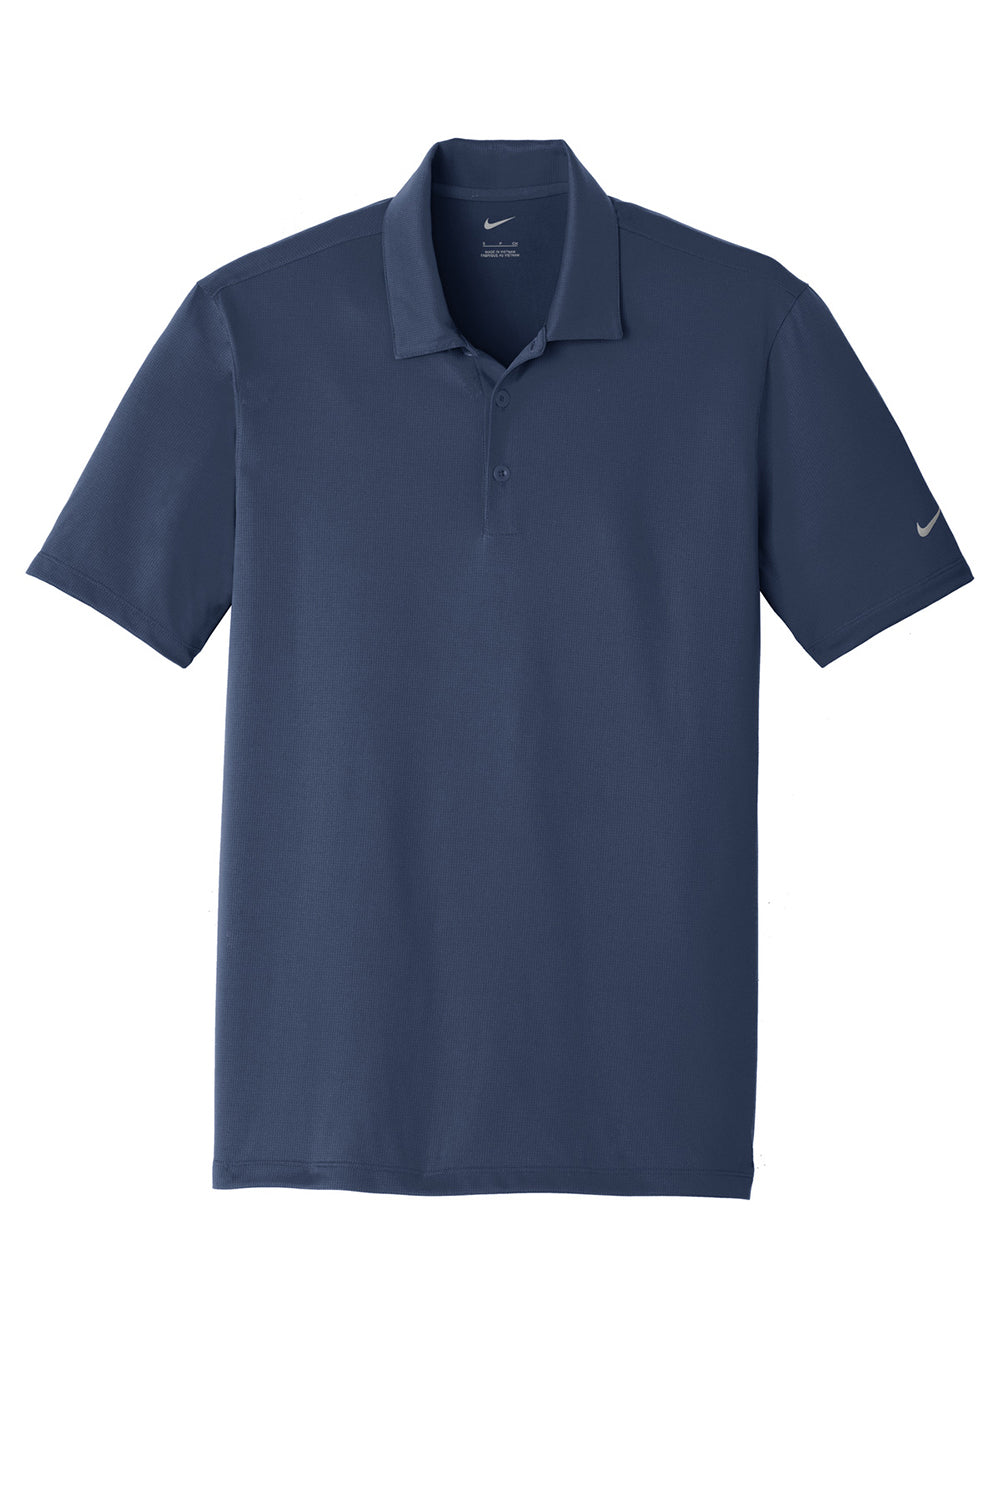 Nike 883681 Mens Legacy Dri-Fit Moisture Wicking Short Sleeve Polo Shirt Midnight Navy Blue Flat Front